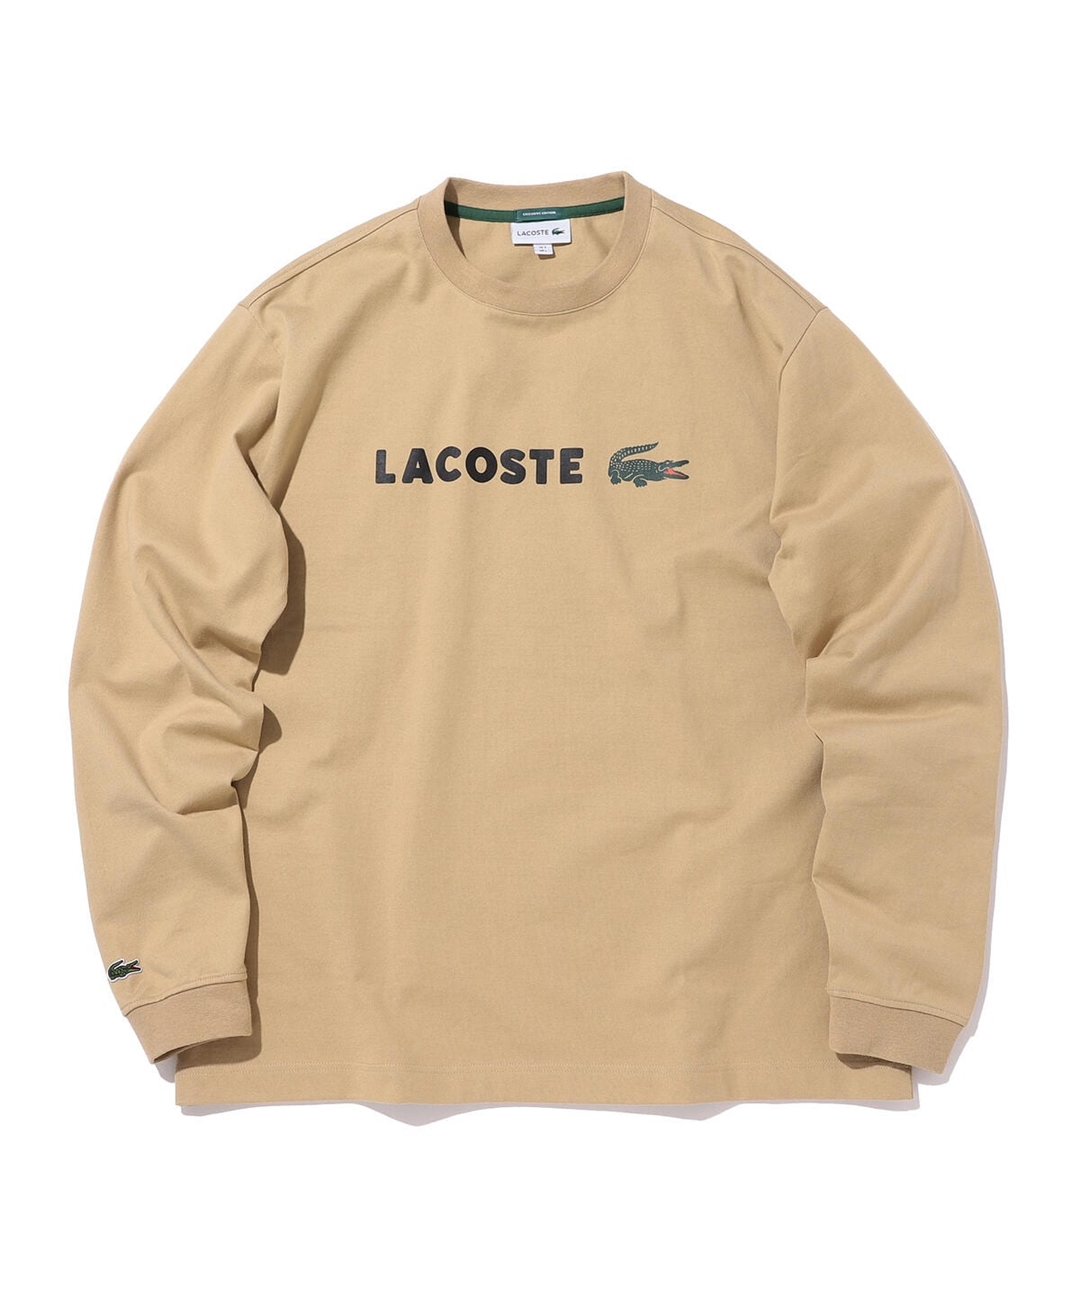 LACOSTE × BEAMS / 別注 Long Sleeve T-shirtが3月上旬発売 (ラコステ ビームス)